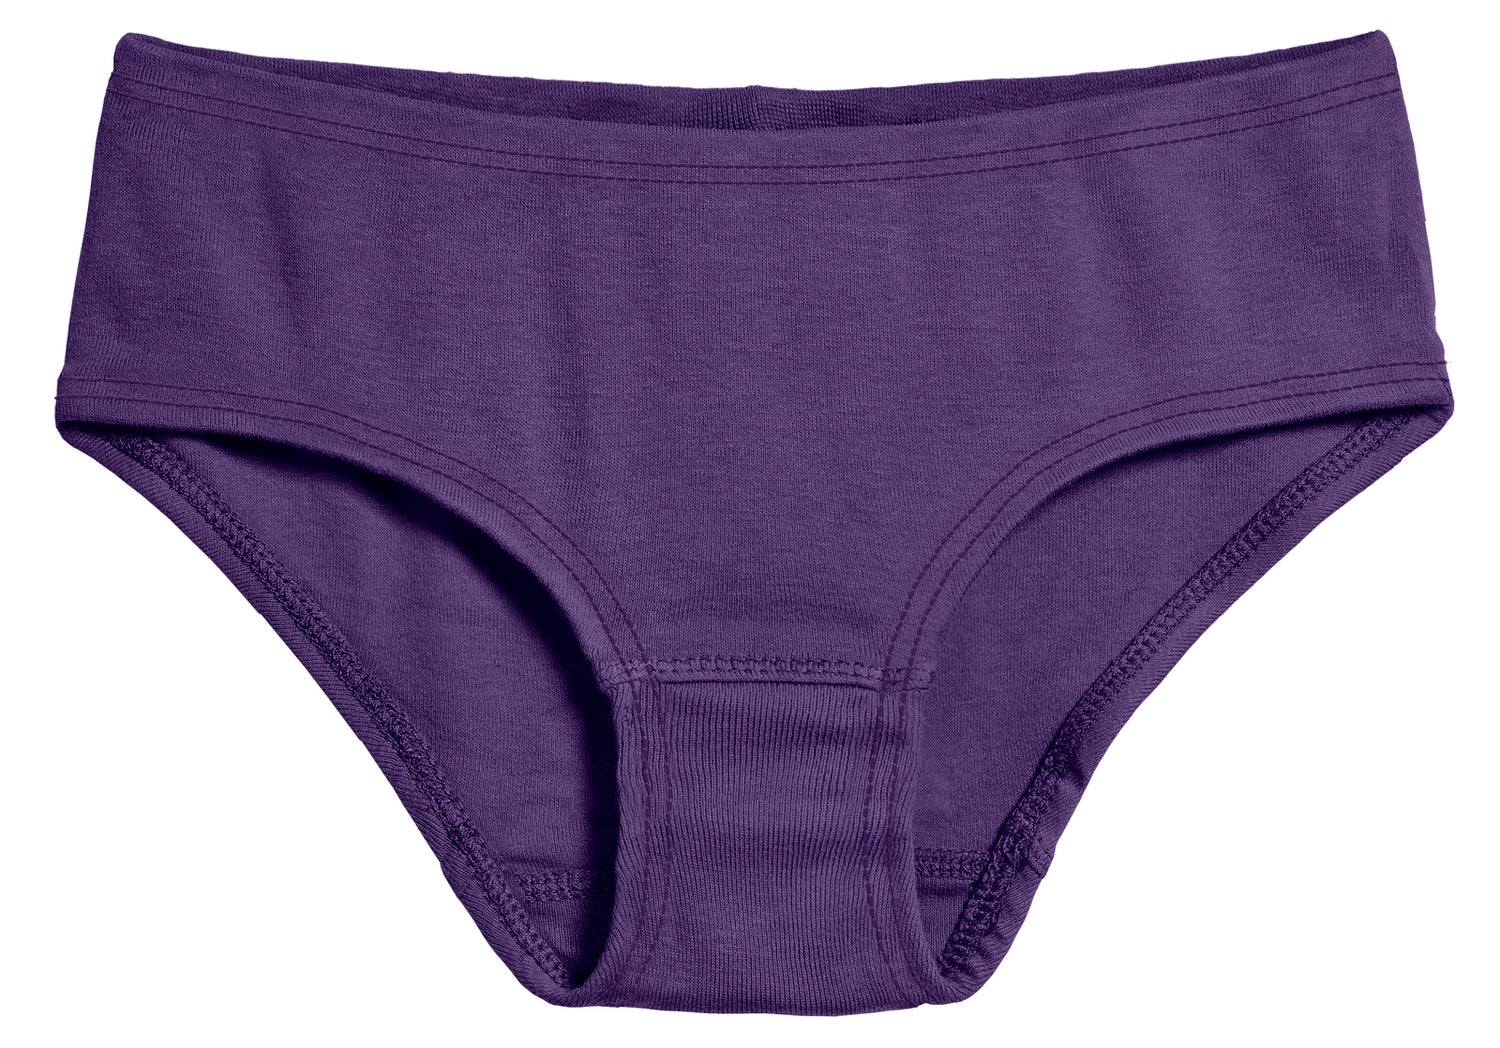 CRIVIT Performance Purple Underwear BNWT (RARE & COLLECTABLE) 4304493040434  on eBid Canada